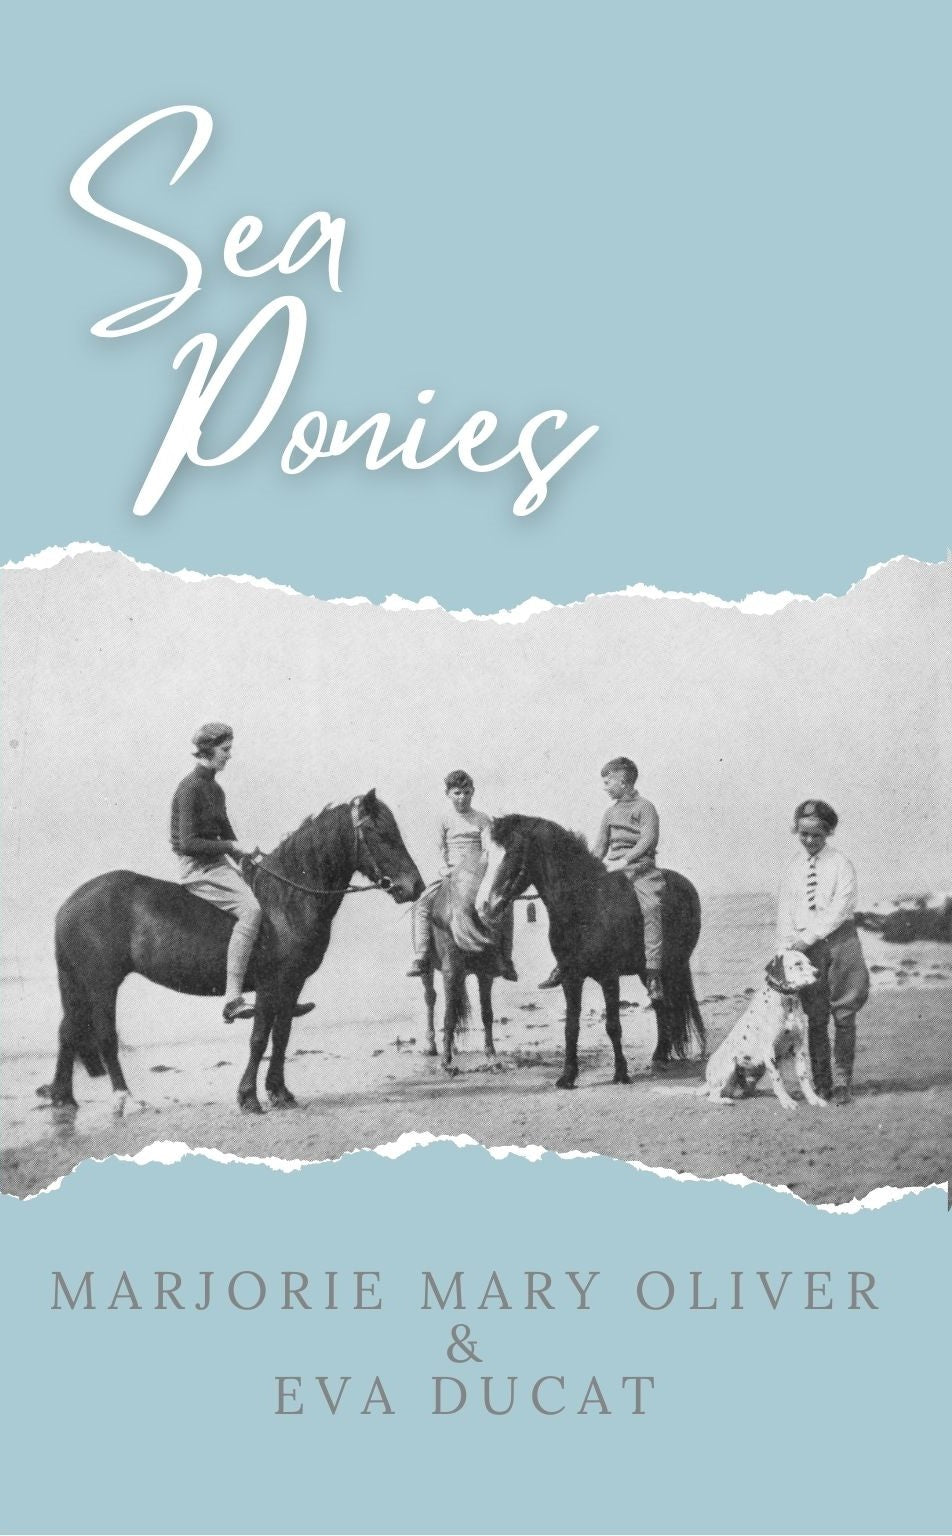 Marjorie Mary Oliver & Eva Ducat: Sea Ponies